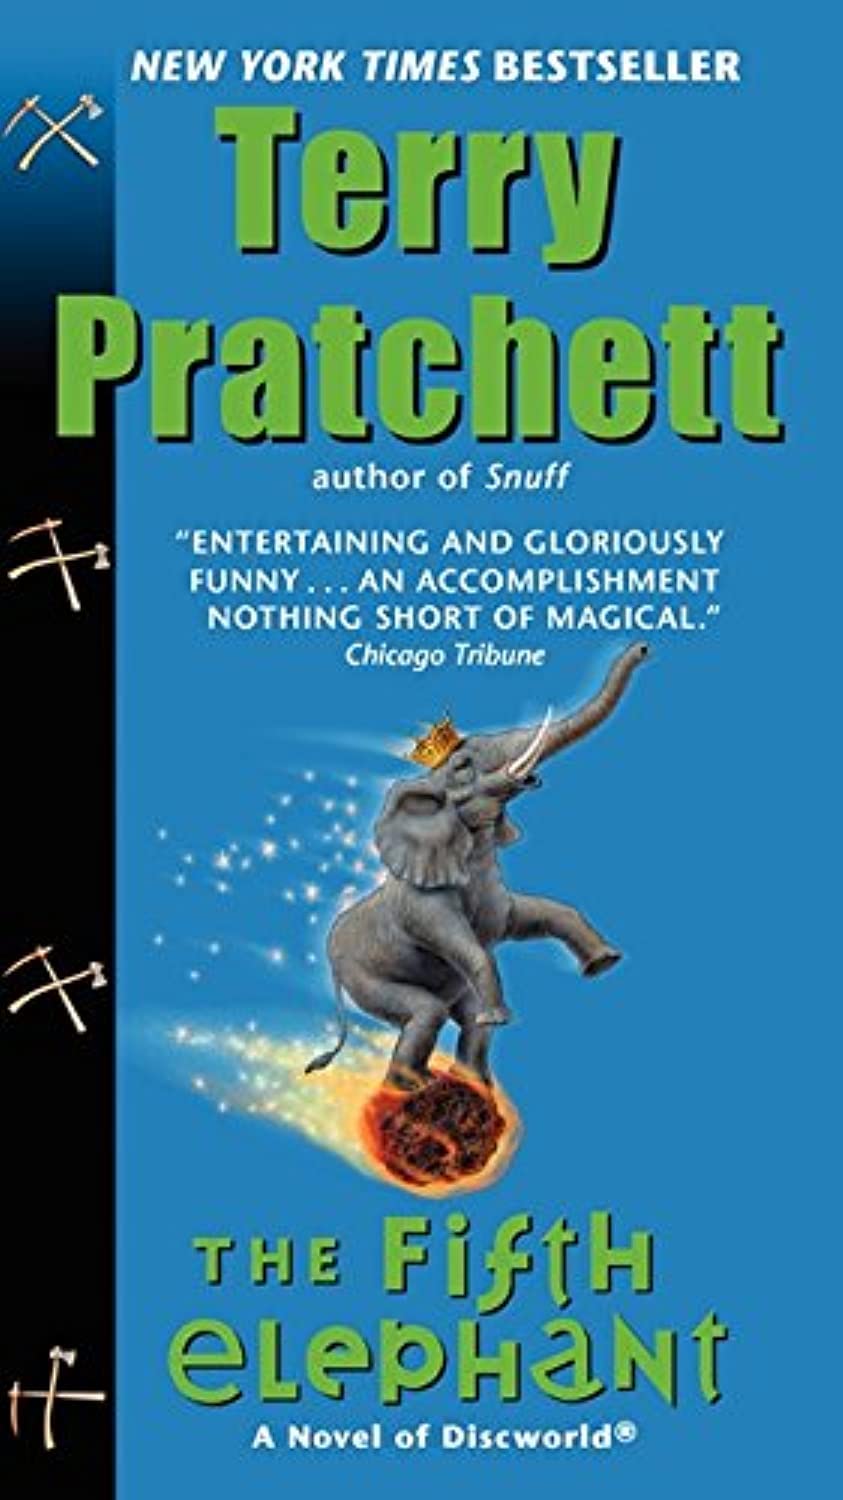 The Fifth Elephant: A Novel of Discworld by Terry Pratchett